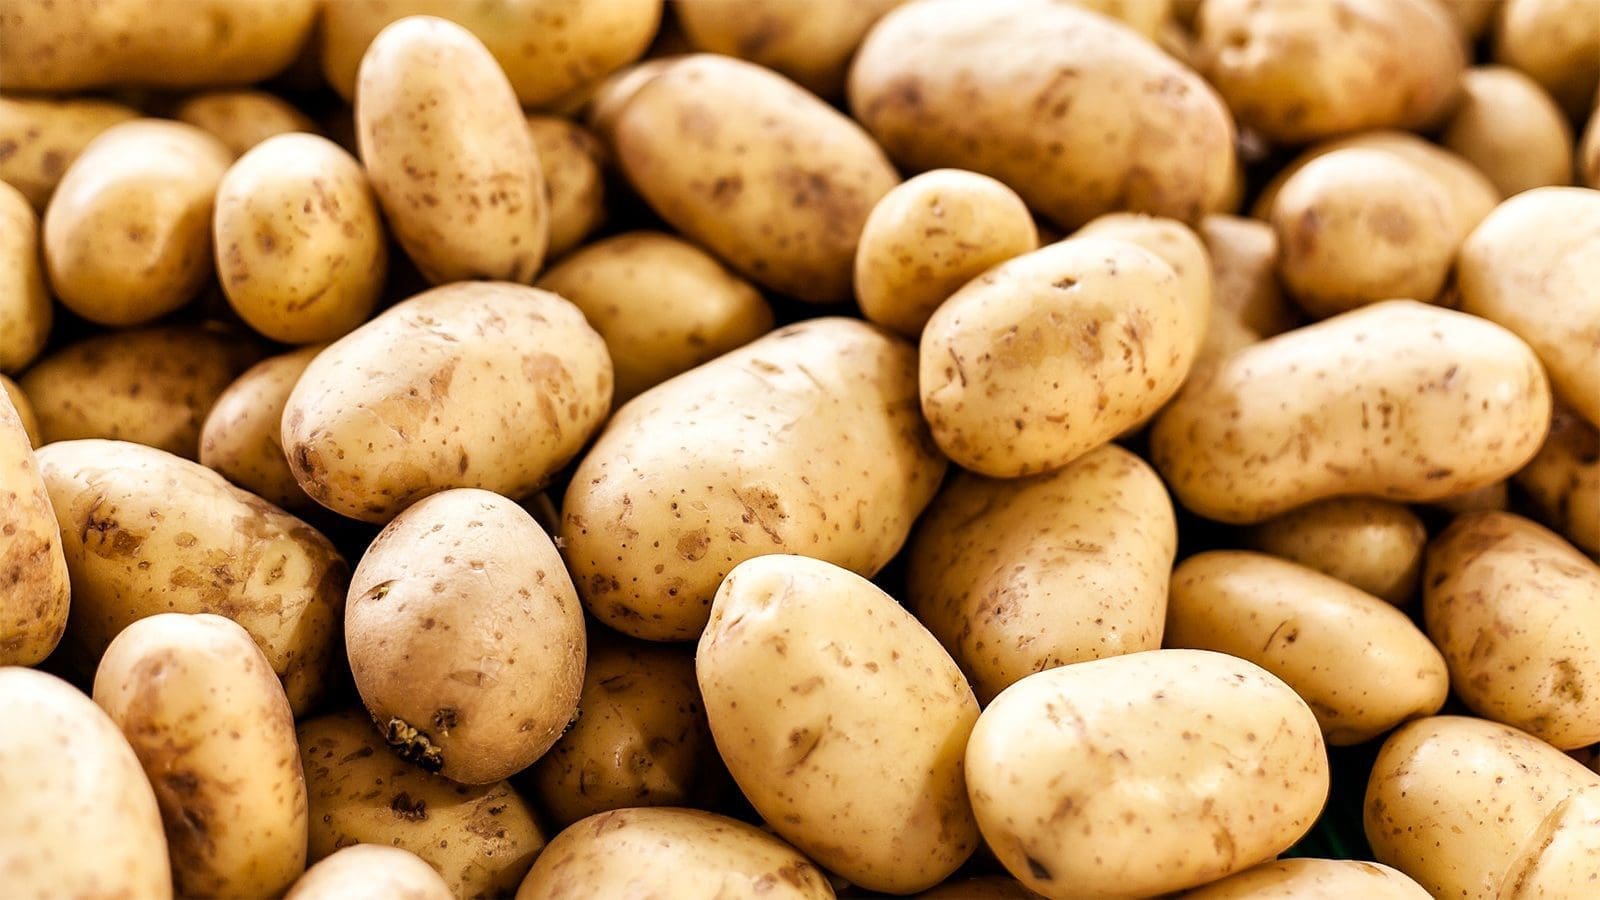 International Potato Center releases potato variety resistant to late blight disease